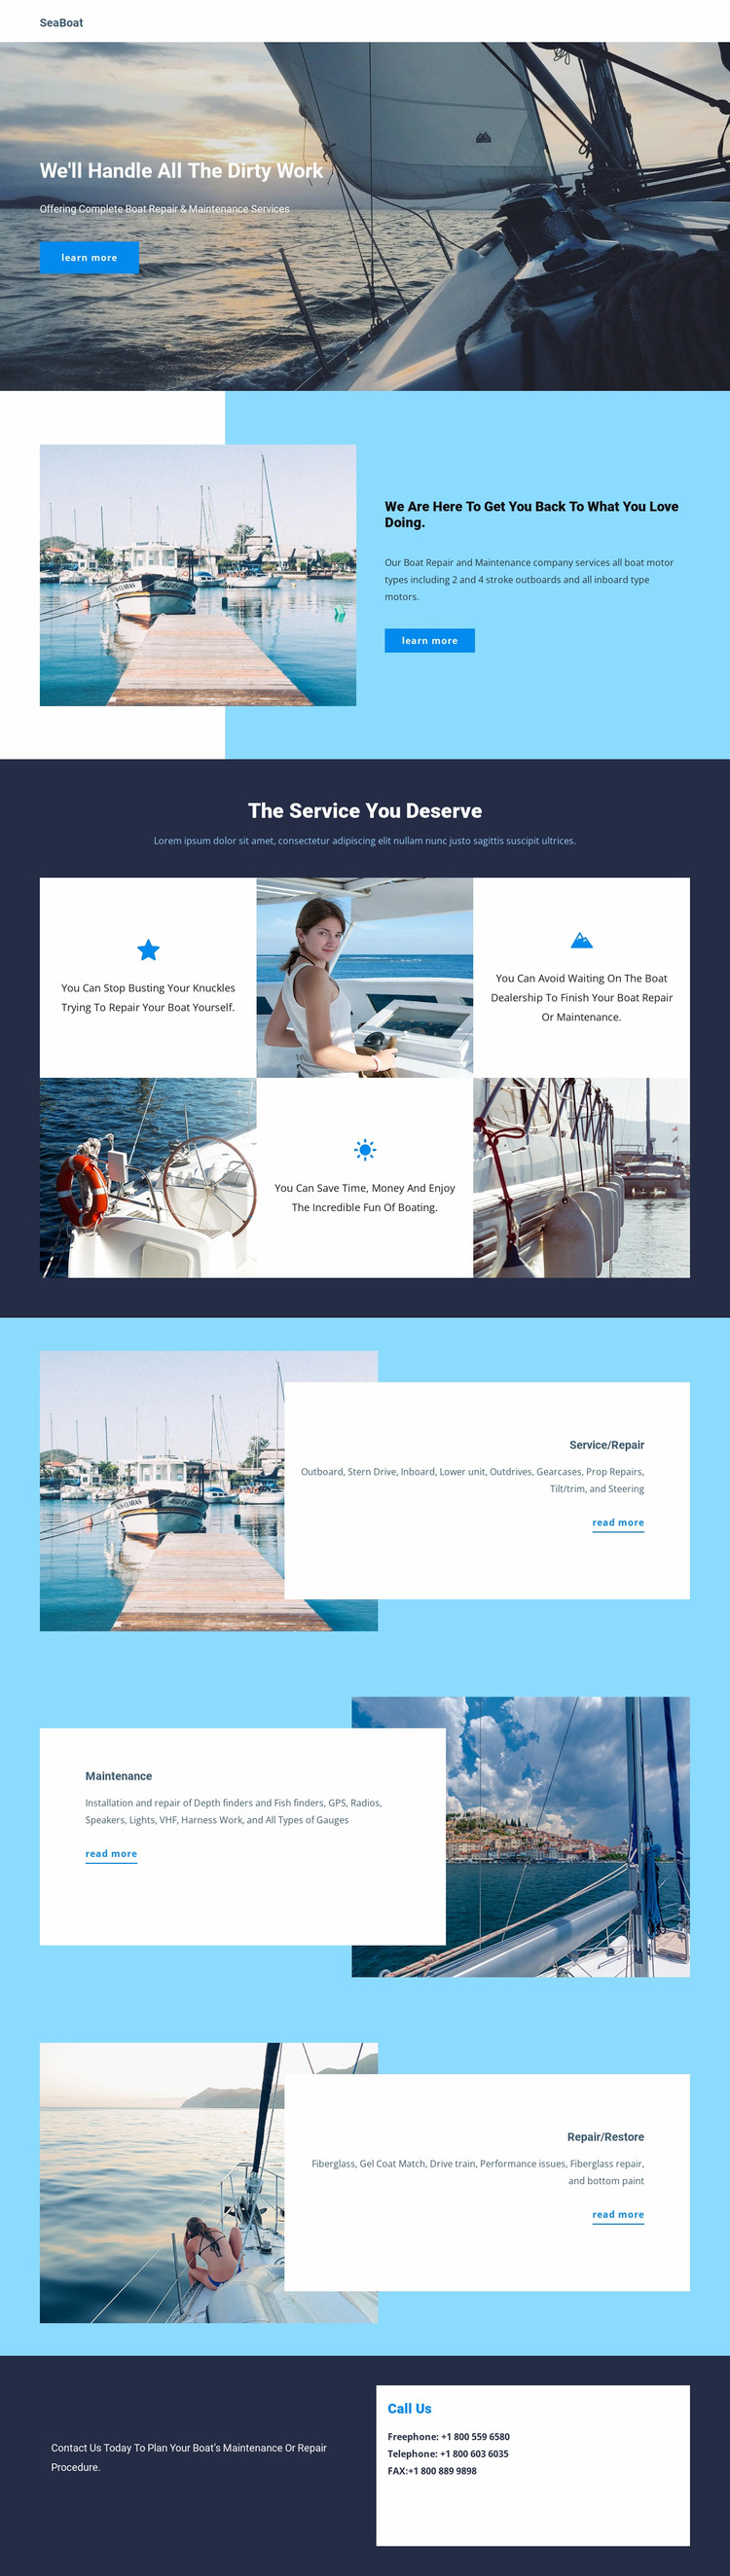 Travel on Seaboat WordPress Website Builder